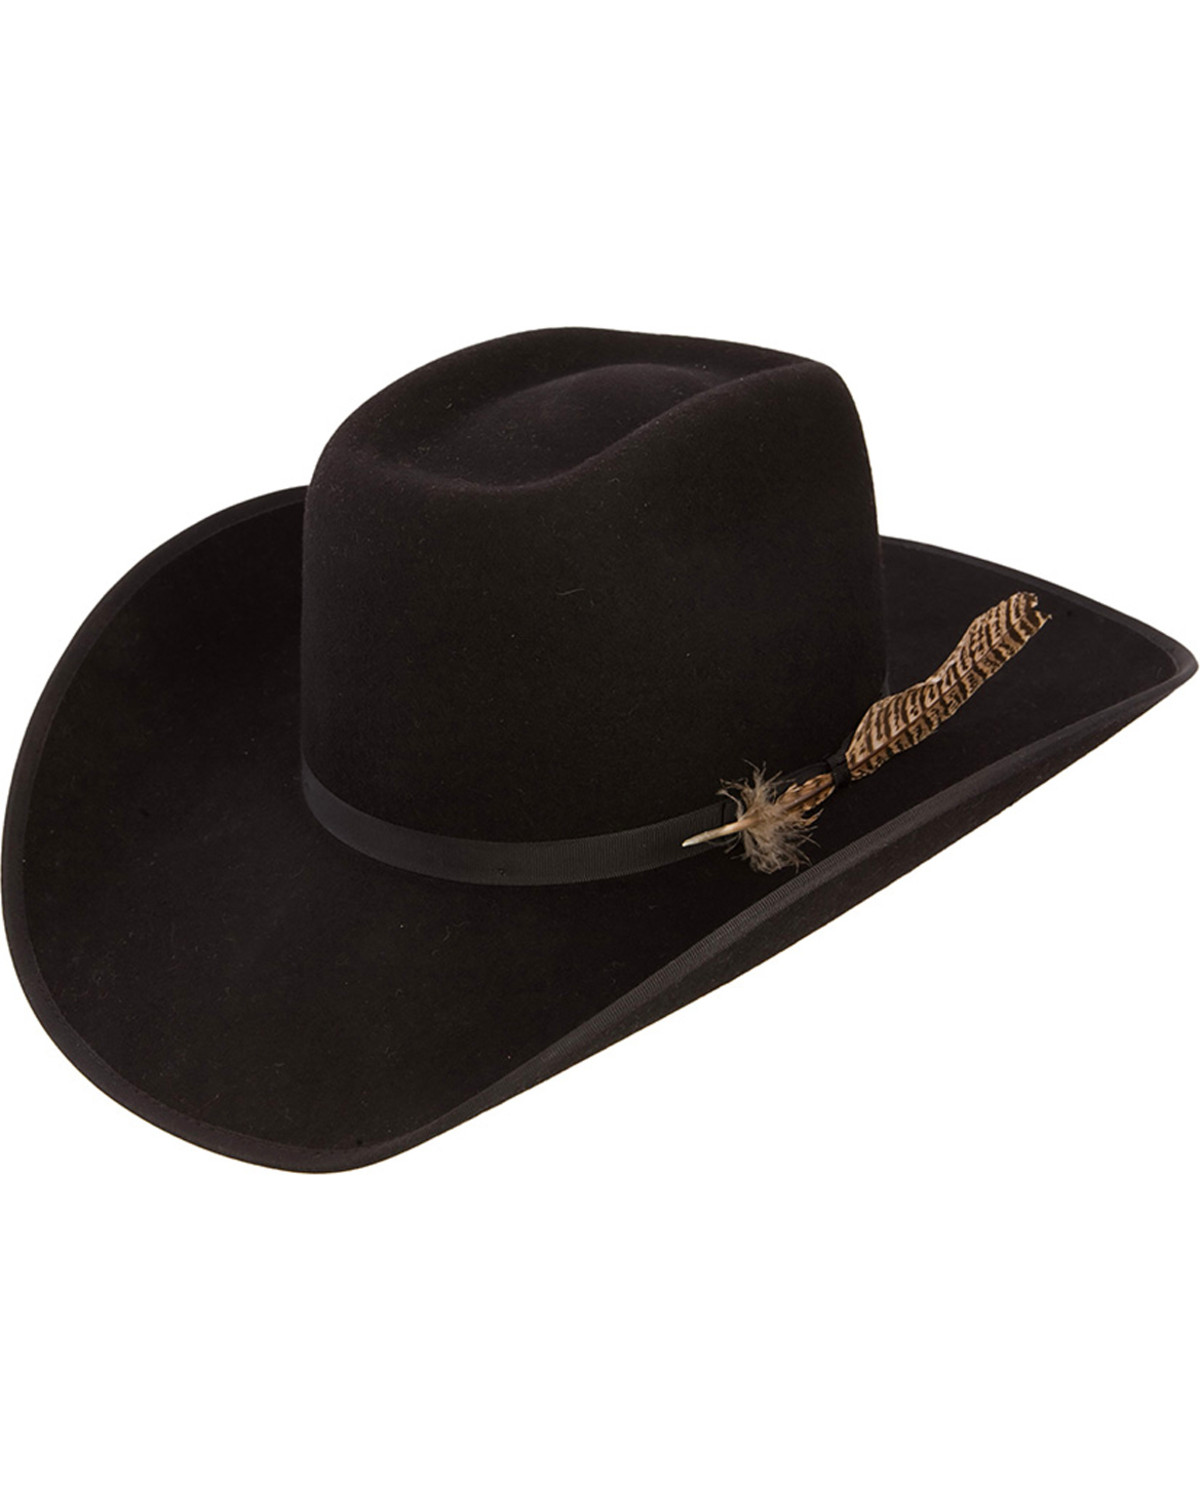 Resistol Youth Kids' Holt JR Felt Cowboy Hat